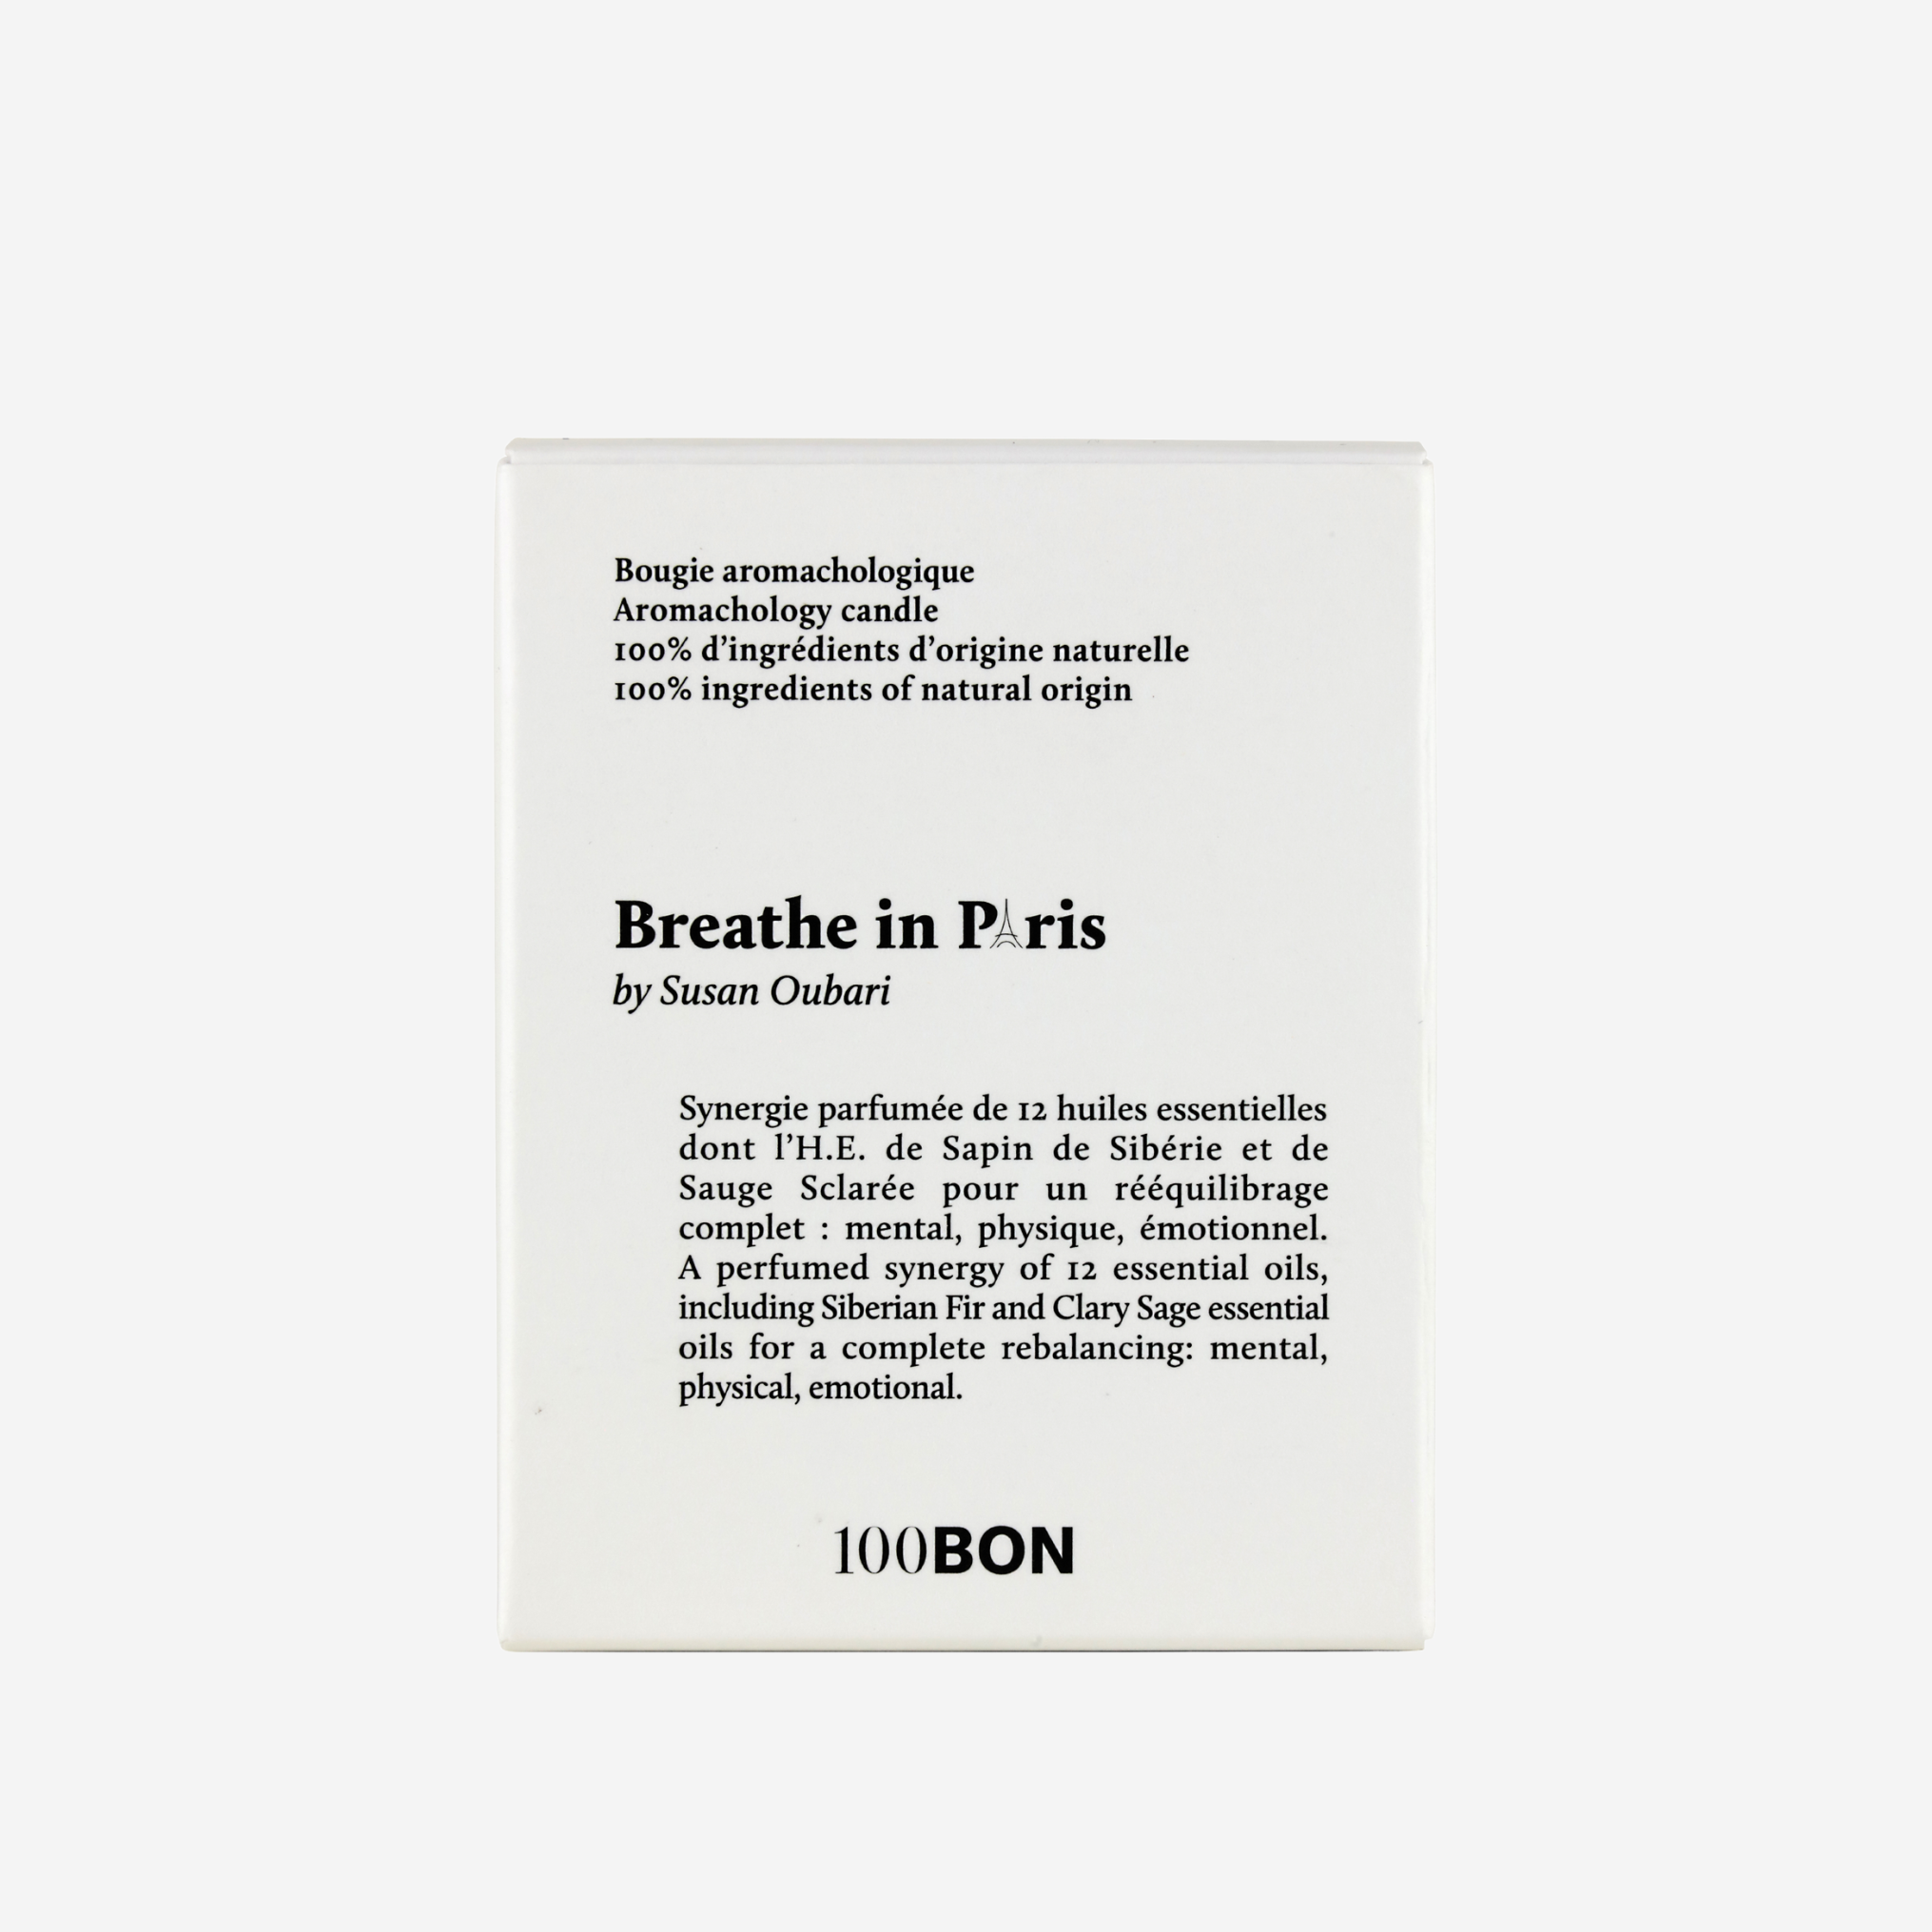 Breathe in Paris by Susan Oubari - Bougie parfumée